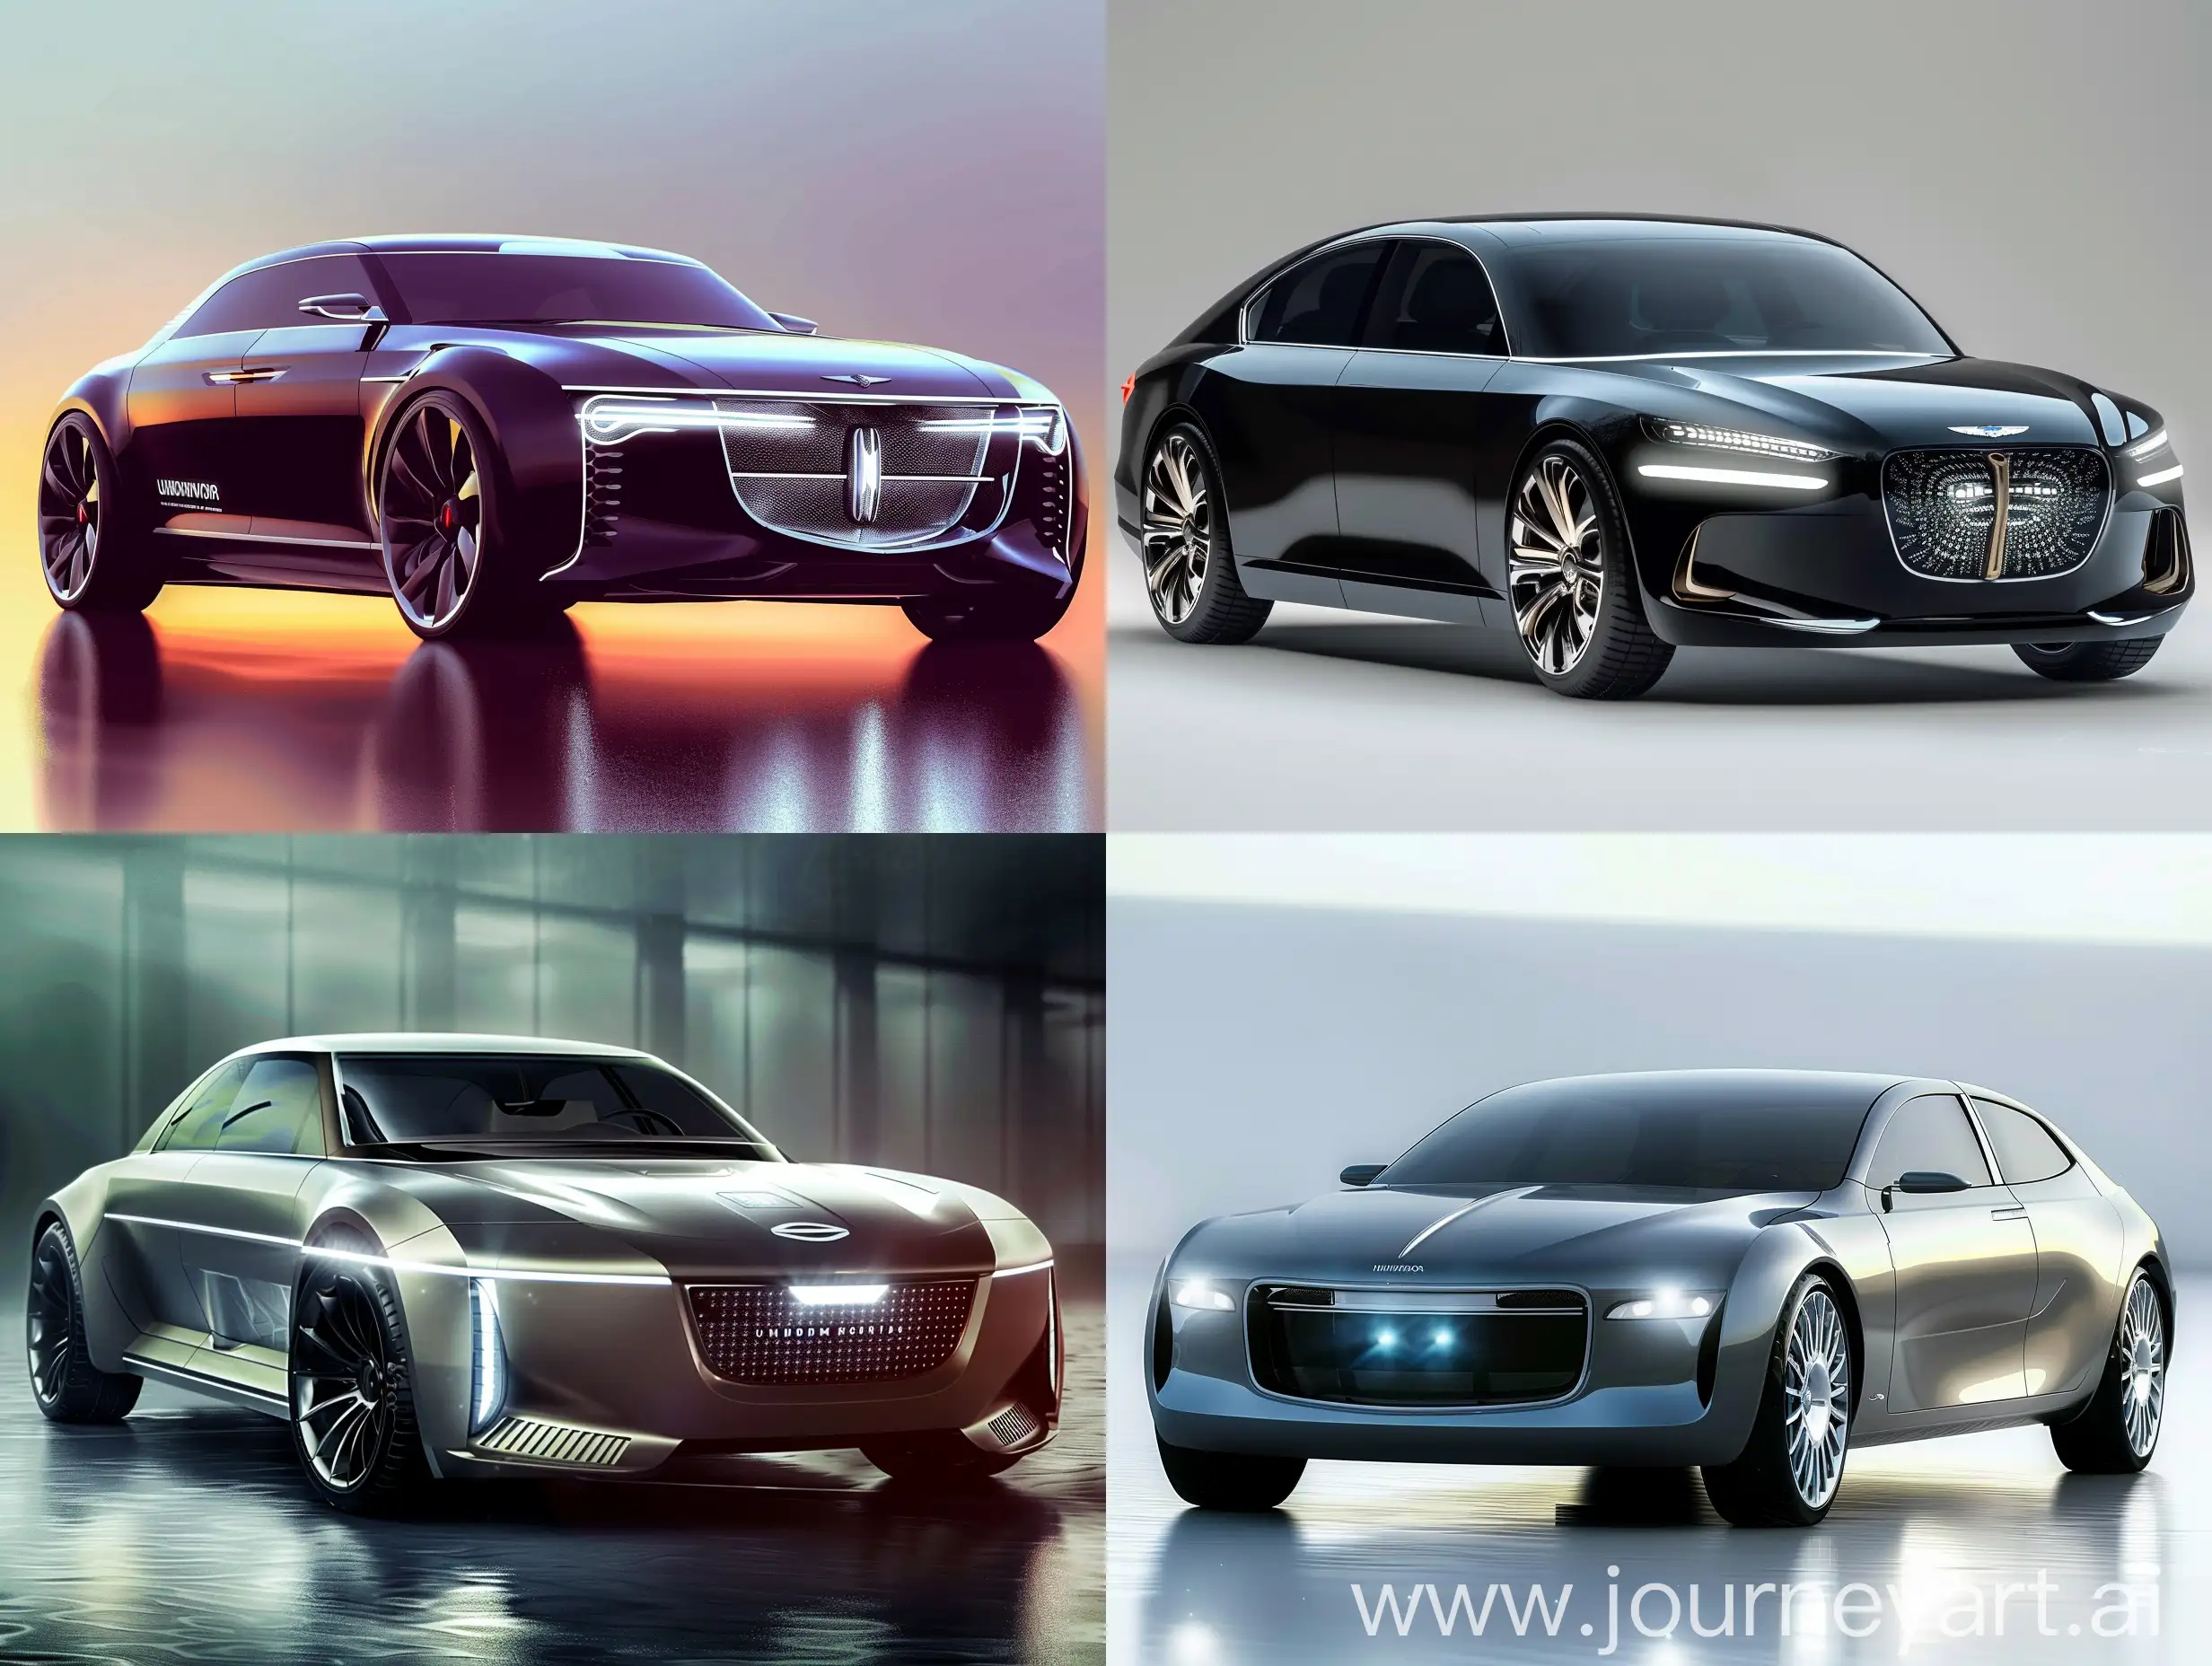 Futuristic-and-Elegant-Redesigned-Hindustan-Motors-Ambassador-Sedan-Car-Front-View